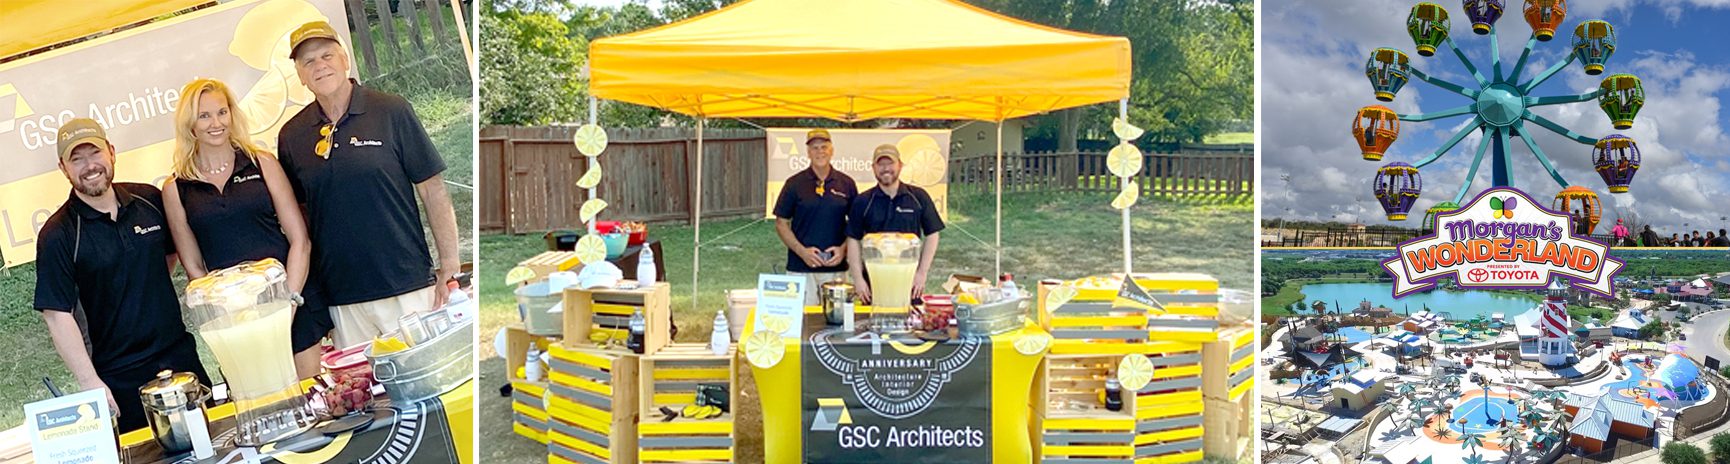 GSC at KFW Engineers Golf Tournament benefitting Morgan’s Wonderland.